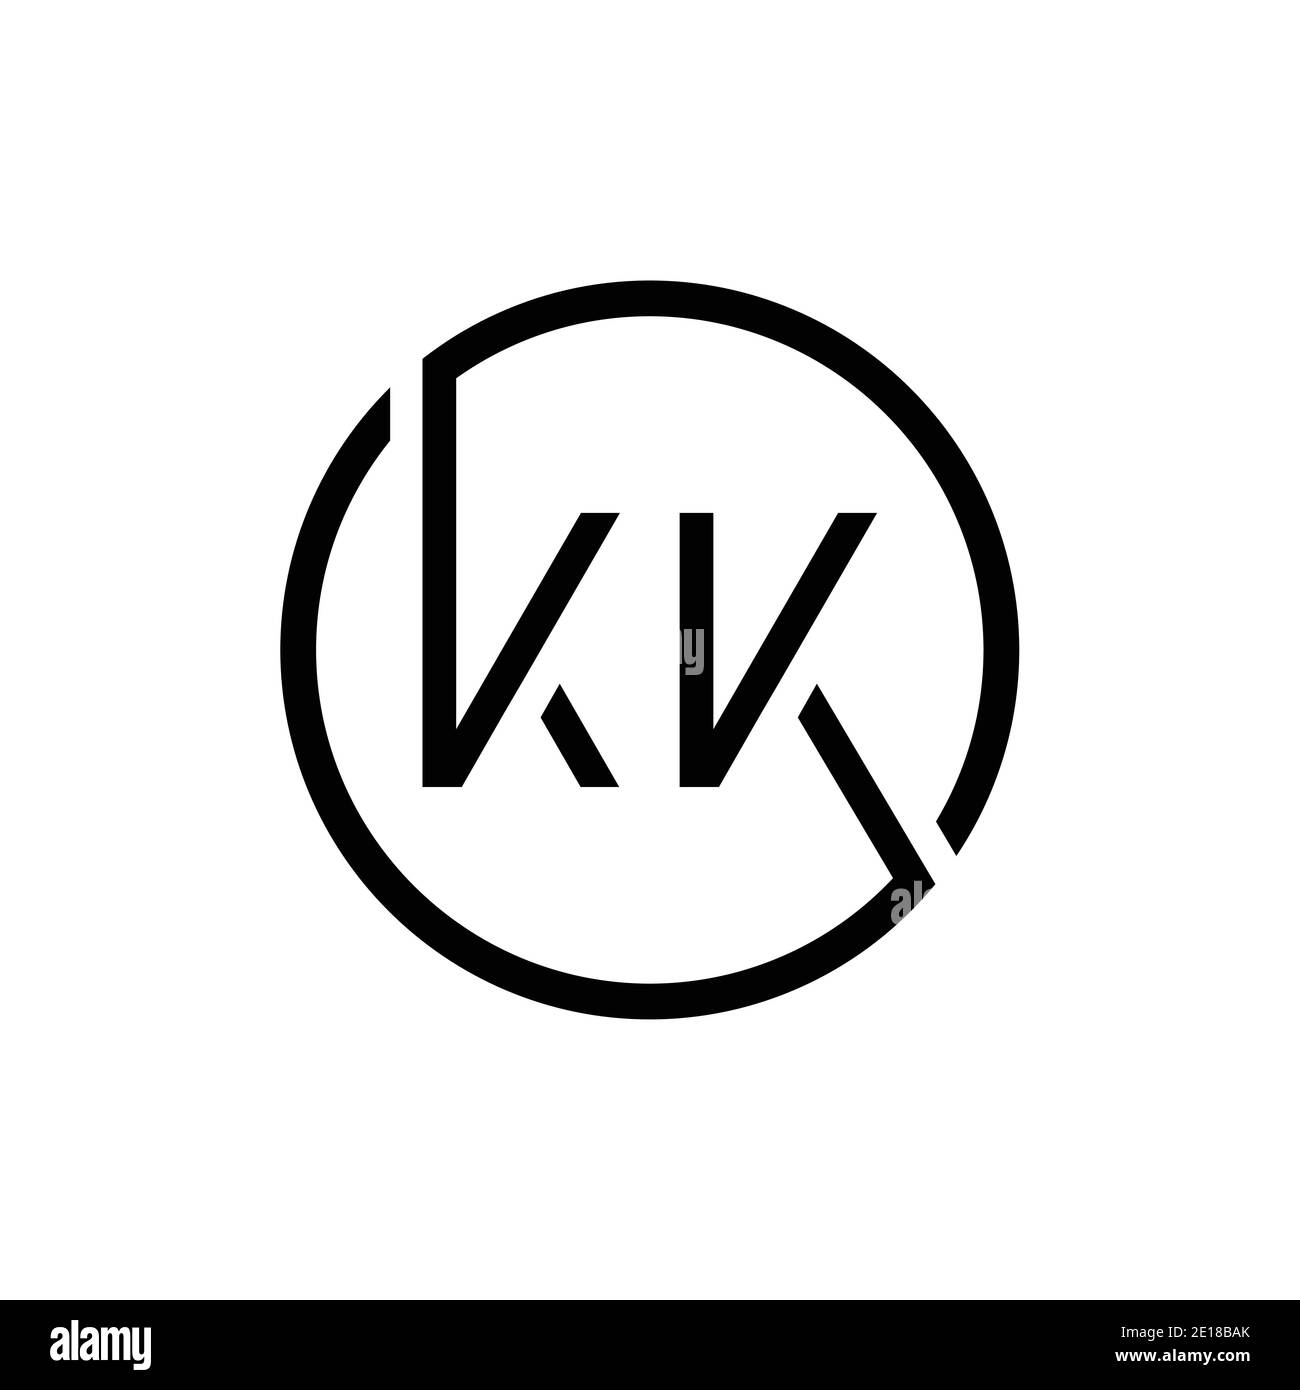 Linked Letter KK Logo Design vector Template. Creative Circle KK Minimal, Flat Logo Design Vector Illustration Stock Vector